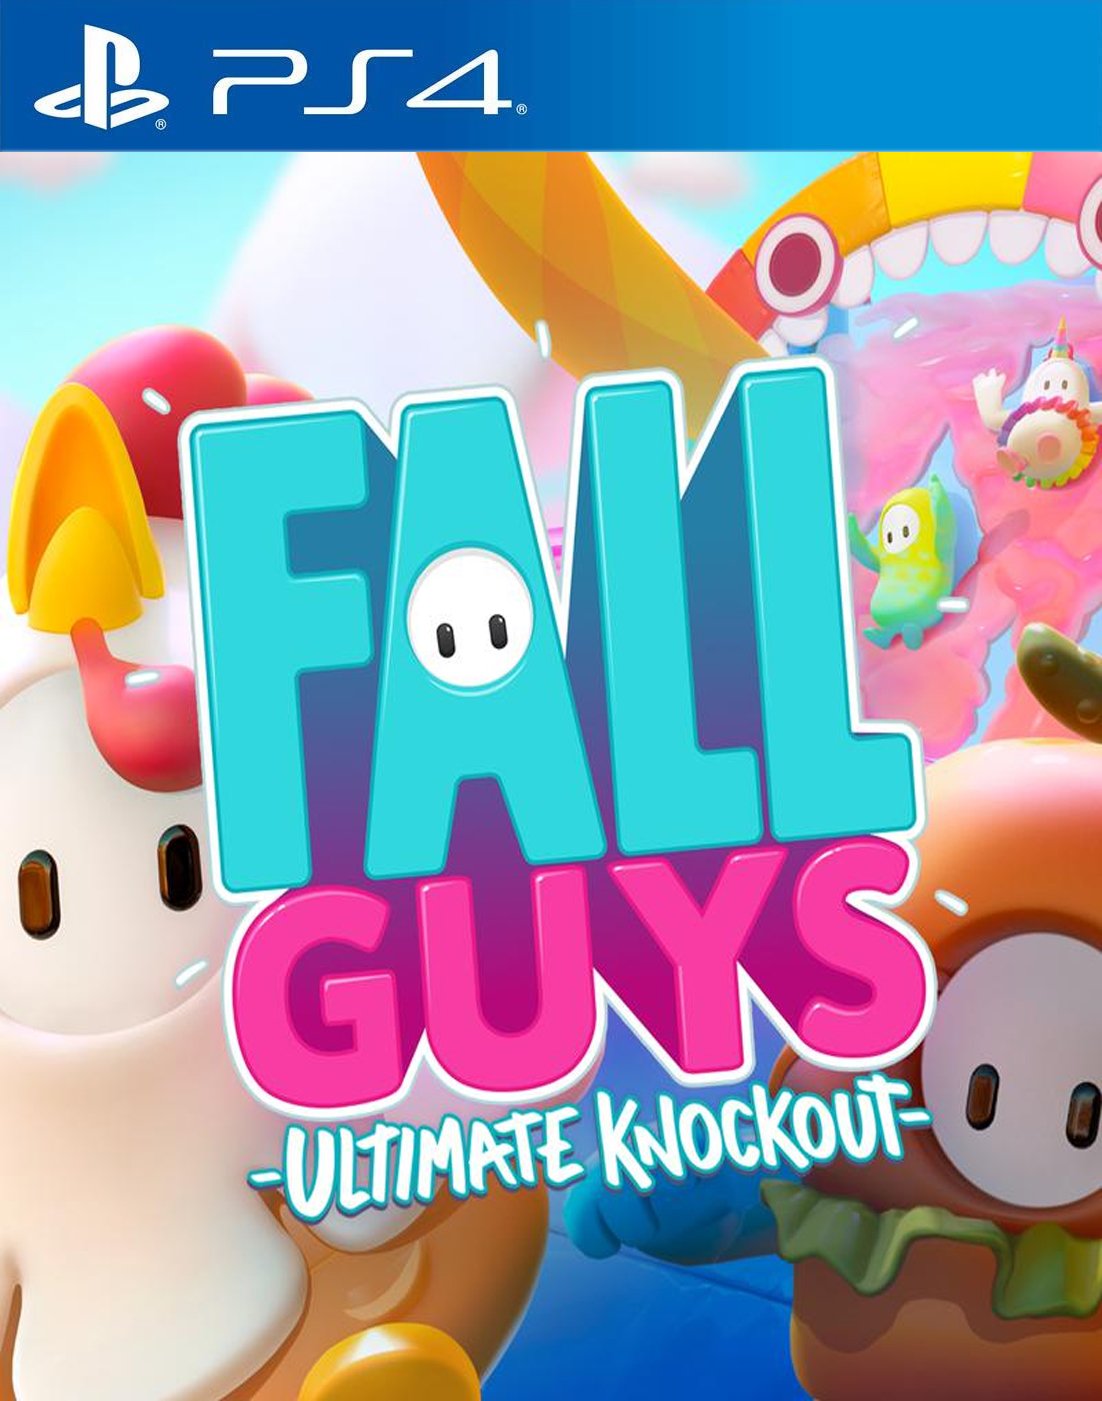 Fall Guys PS4